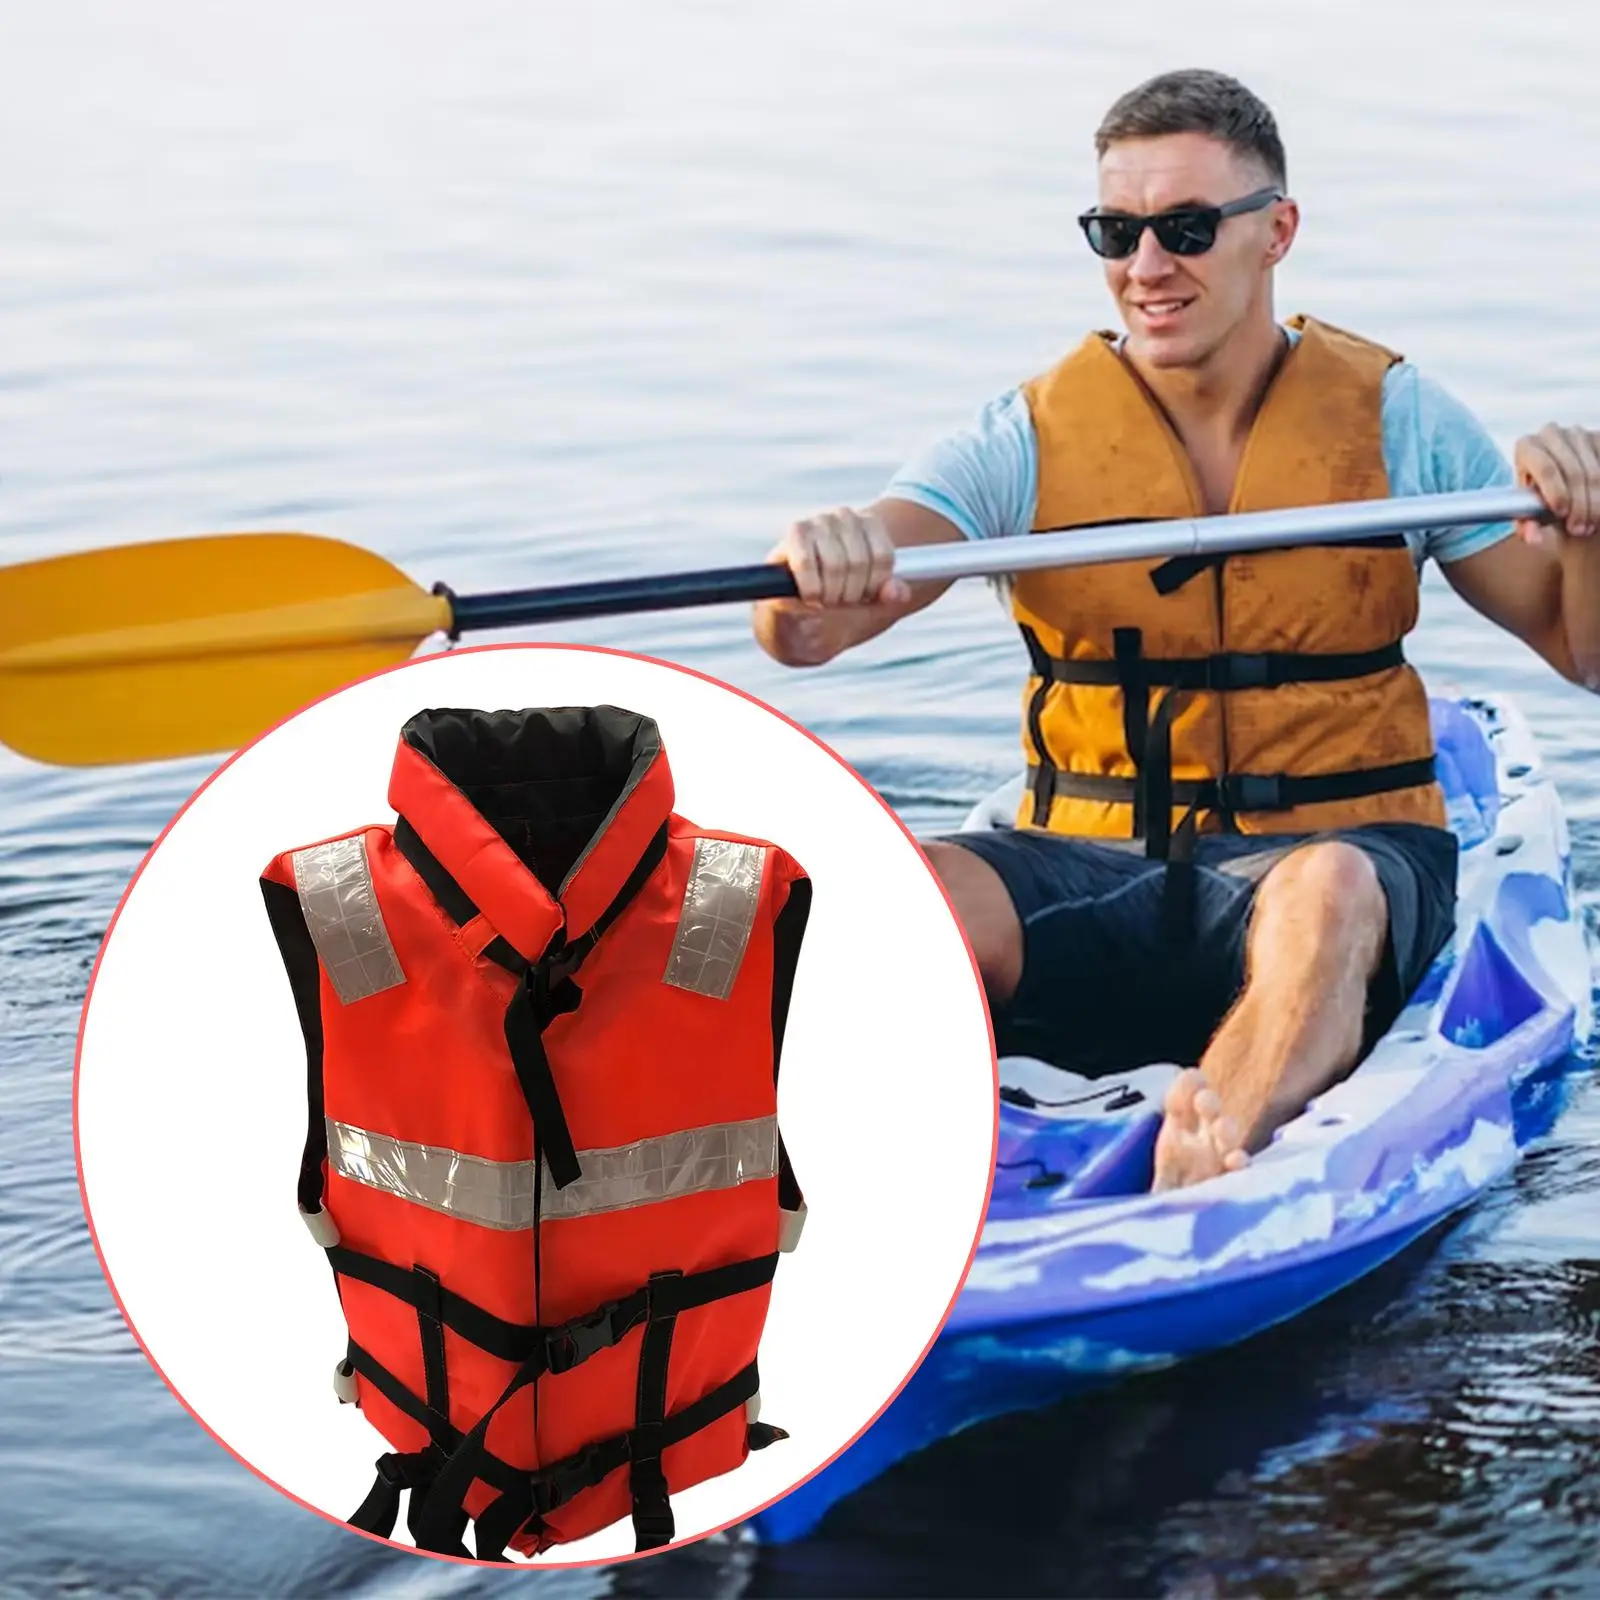 Orange Kayak Life Jacket Kayaking Paddle Board Buoyancy Aid for Fishing Sailing